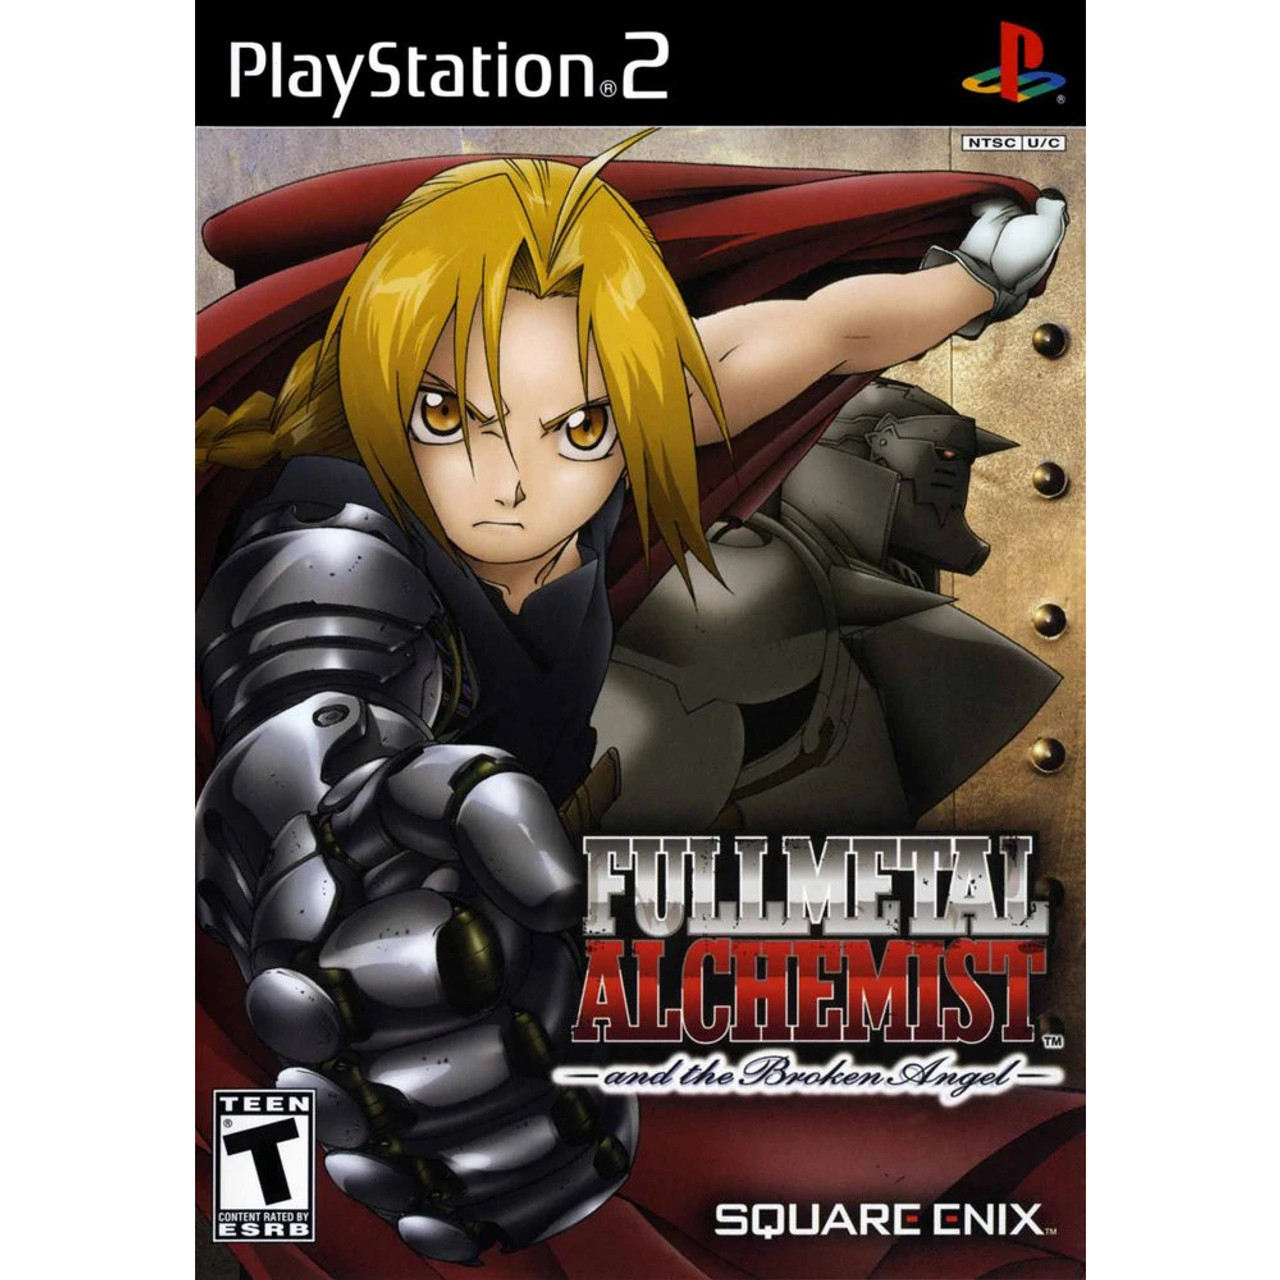 Fullmetal Alchemist and the Broken Angel for PlayStation 2 